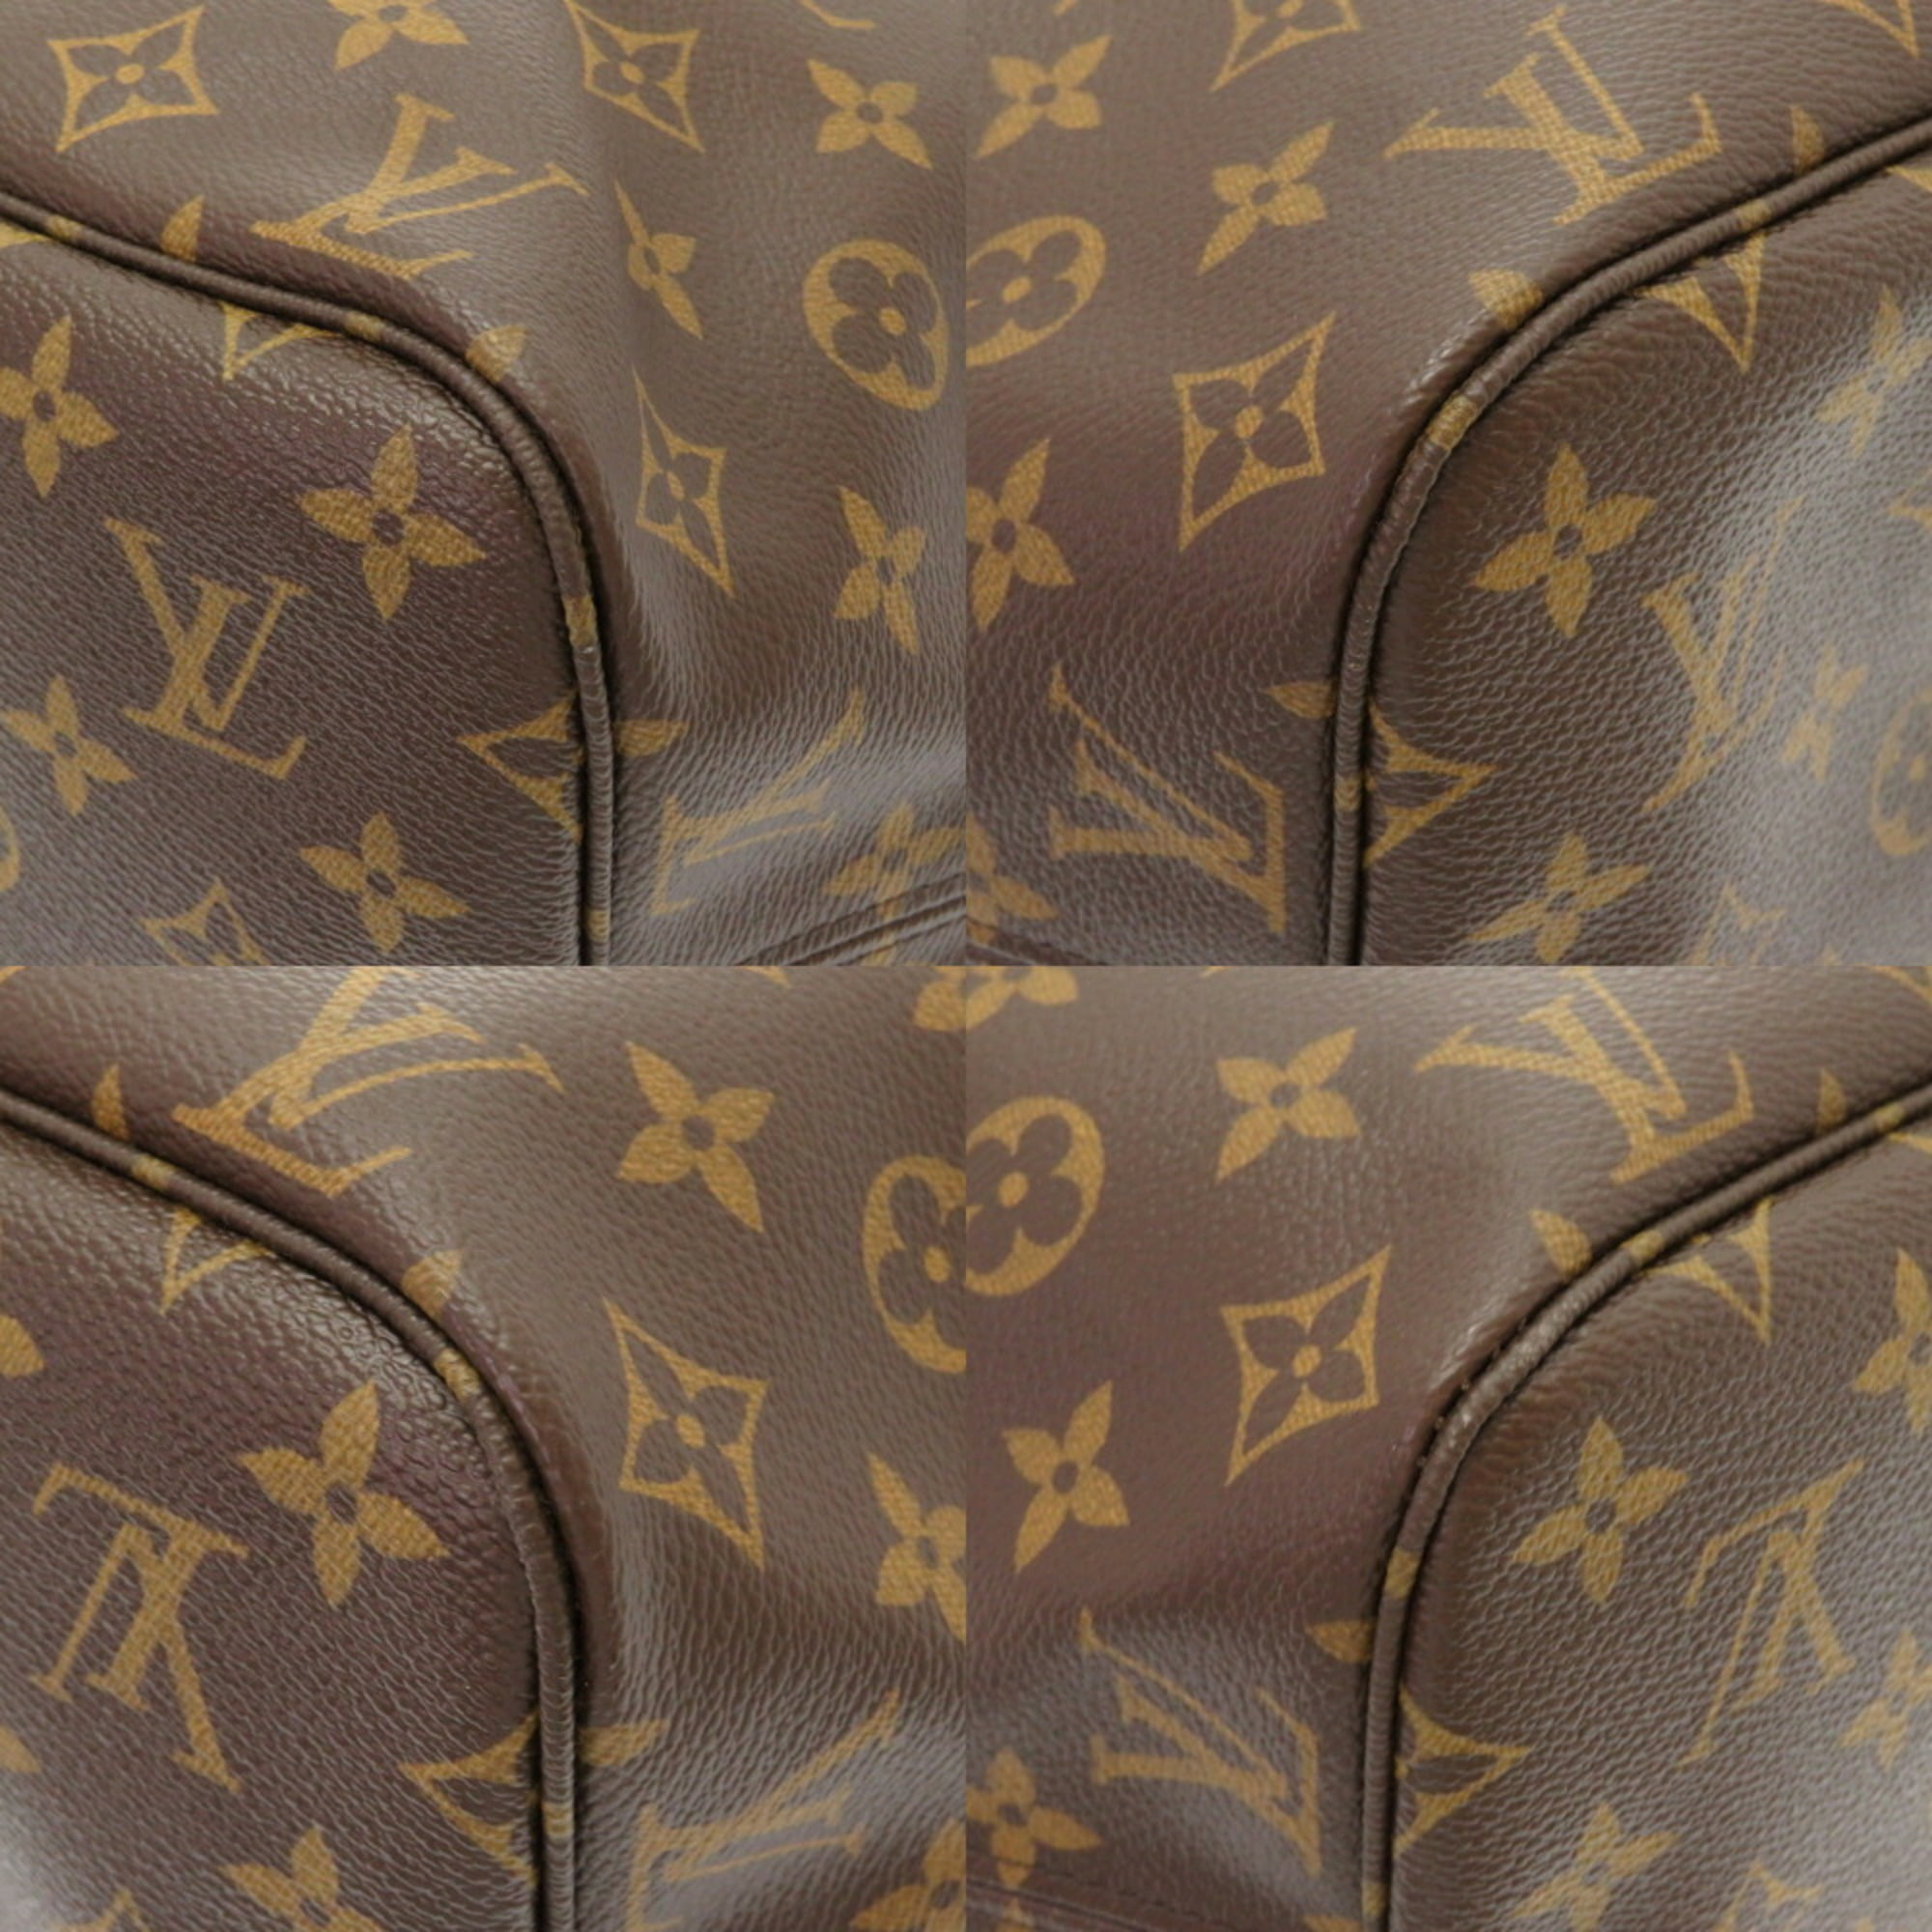 Authentic Louis Vuitton Neverfull MM Monogram M40156 No Adjust Strap Tote  ALA588